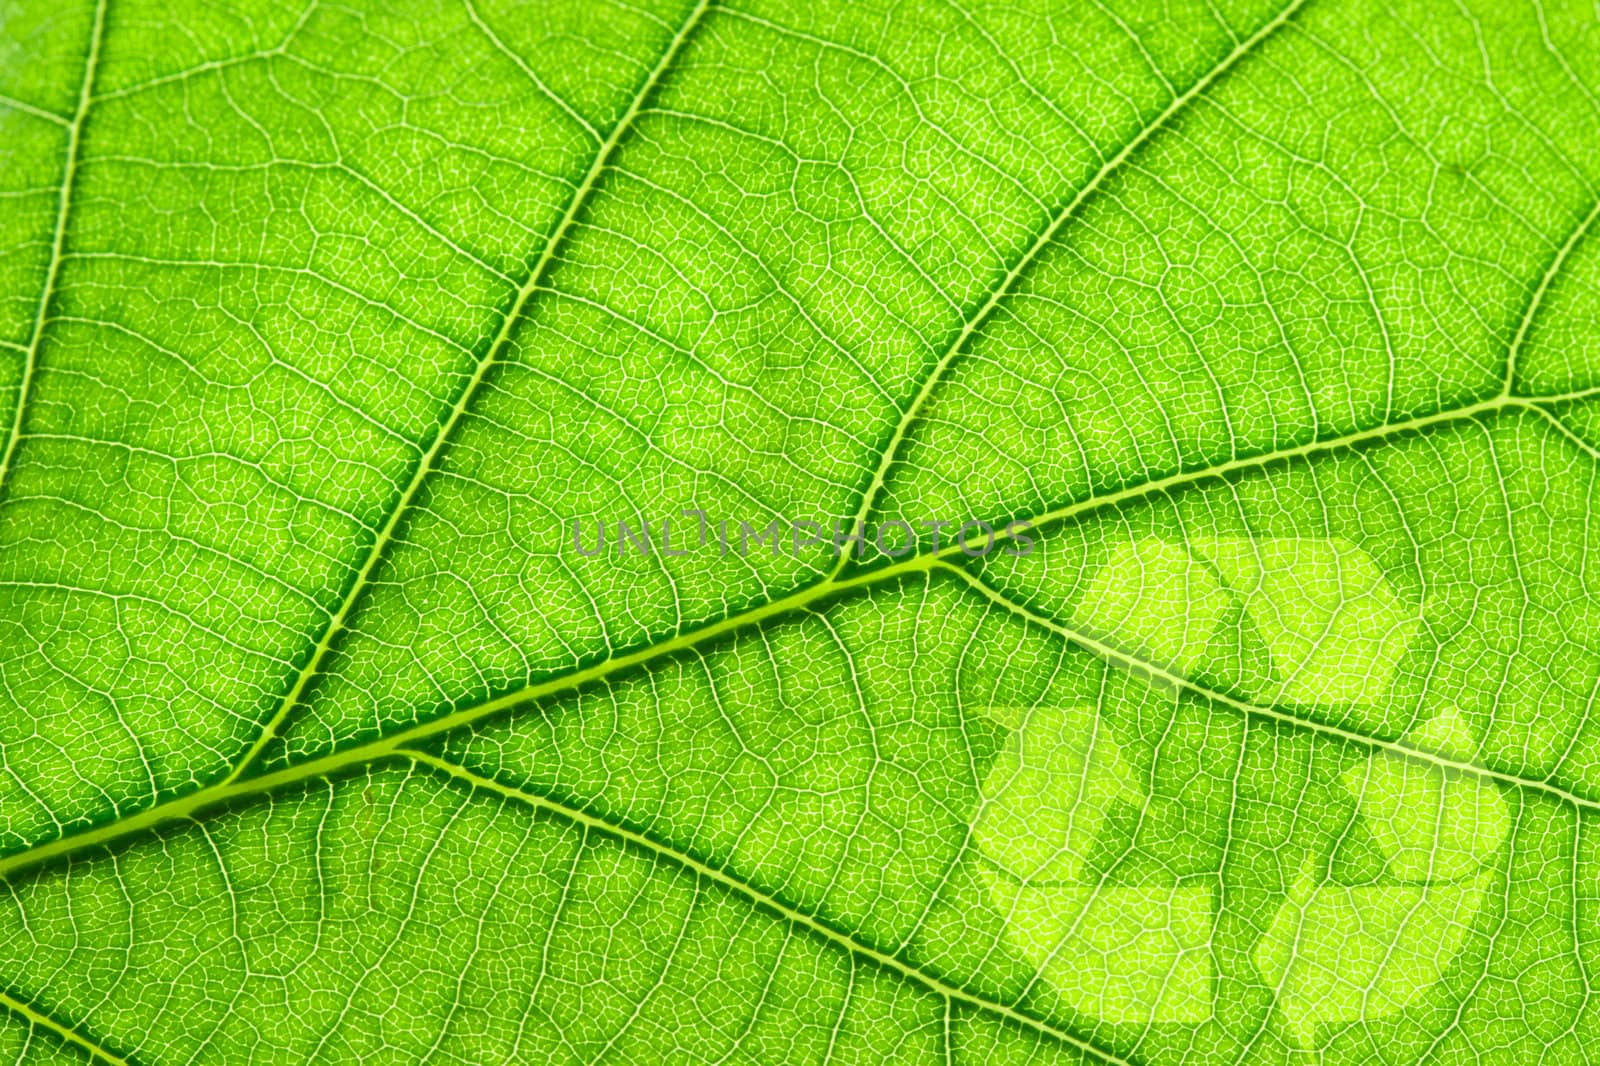 Recycling symbol on green leaf